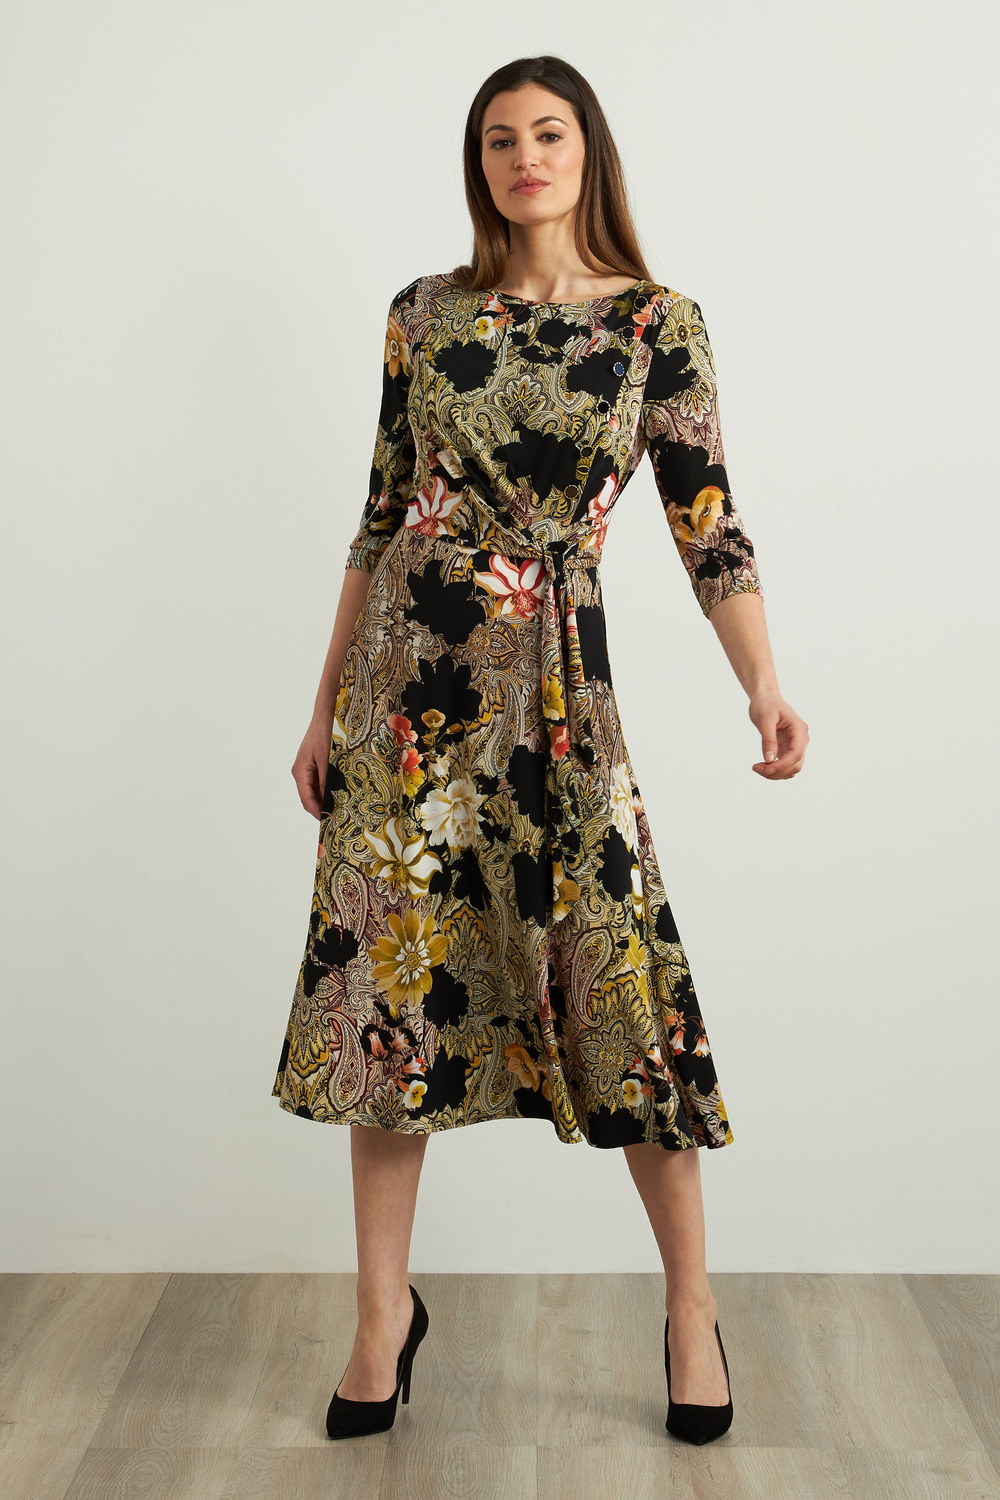 Joseph Ribkoff Paisley & Floral Dress Style 213560. Black/multi